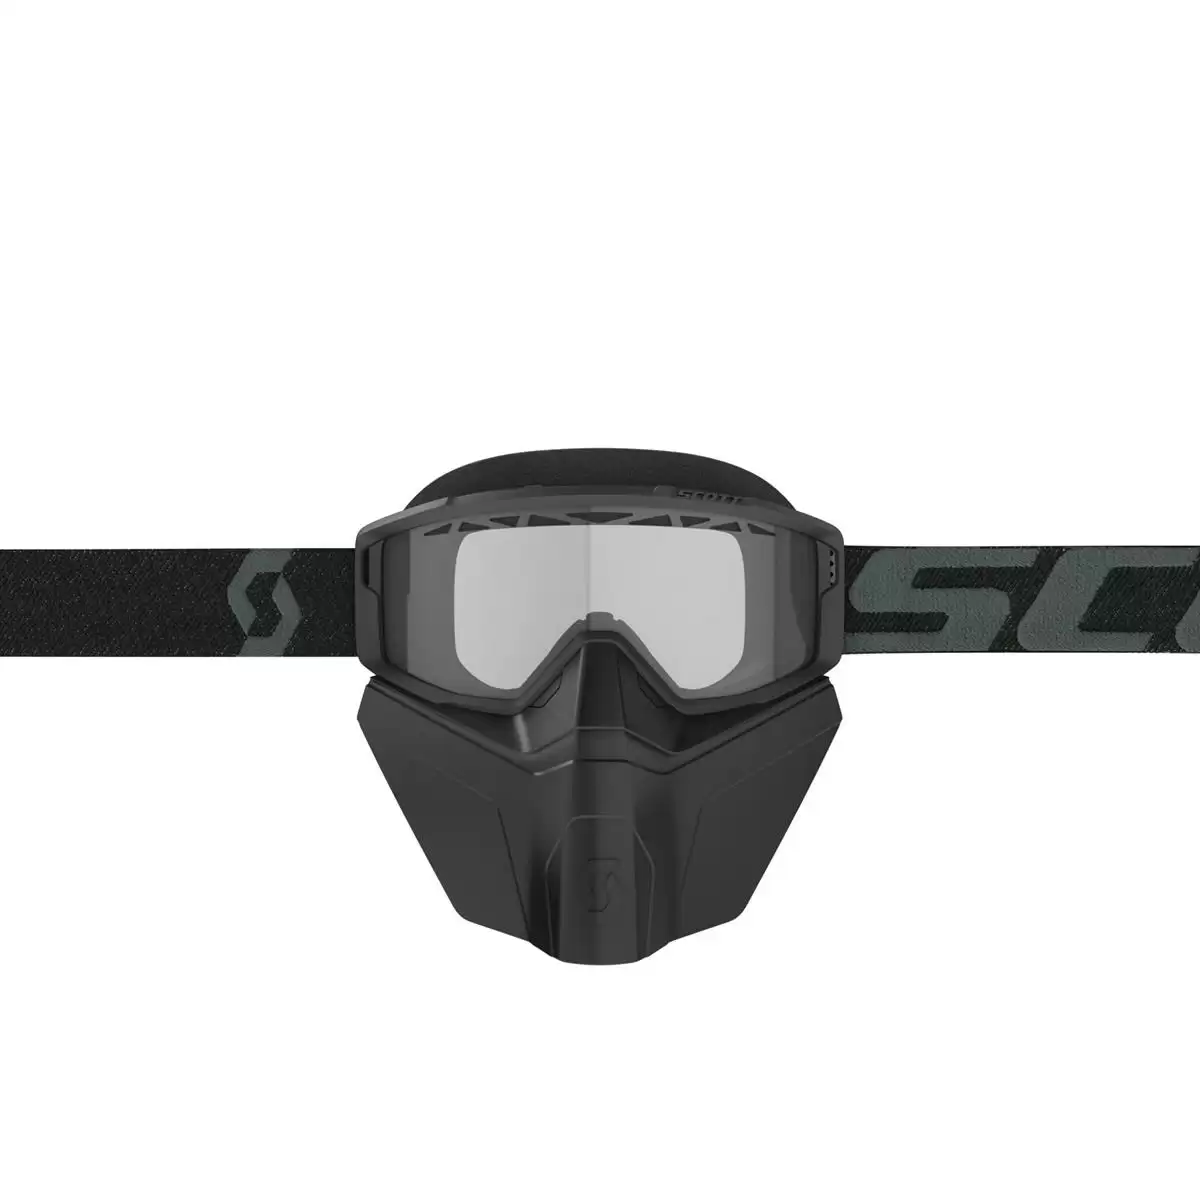 Primal Safari Facemask goggle Black - Clear NoFog visor #1